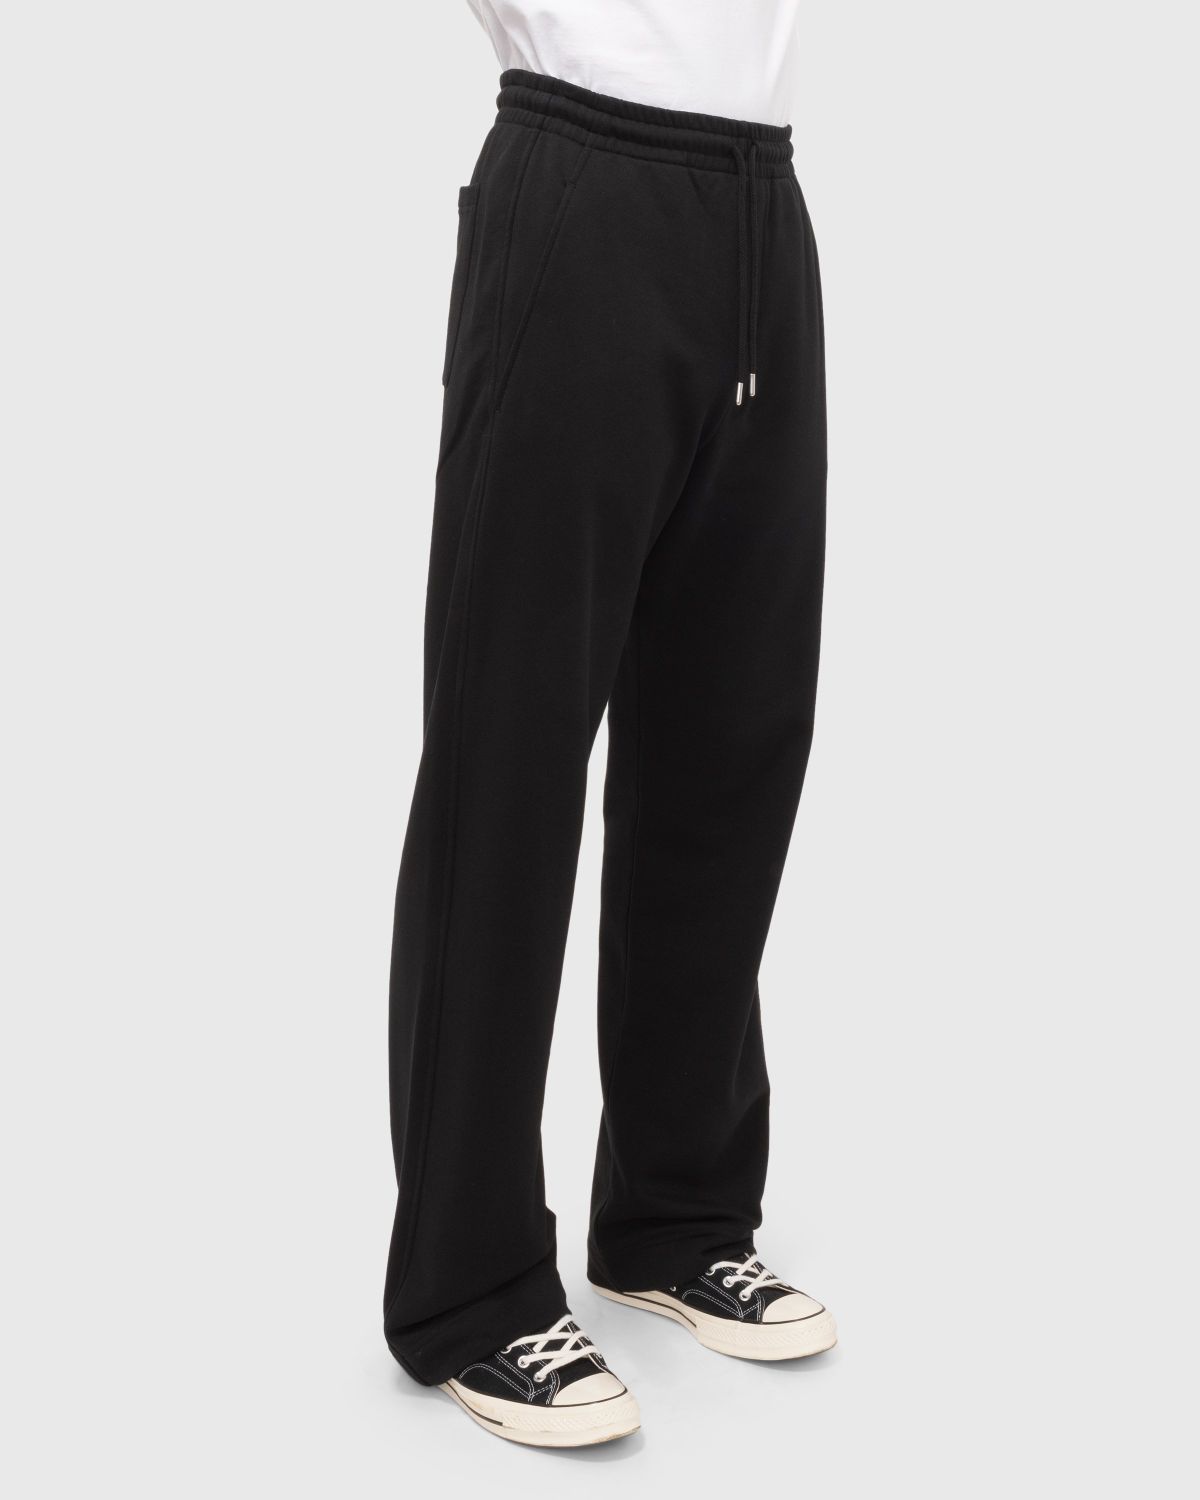 Dries van Noten – Hamer Sweatpants Black - Sweatpants - Black - Image 3